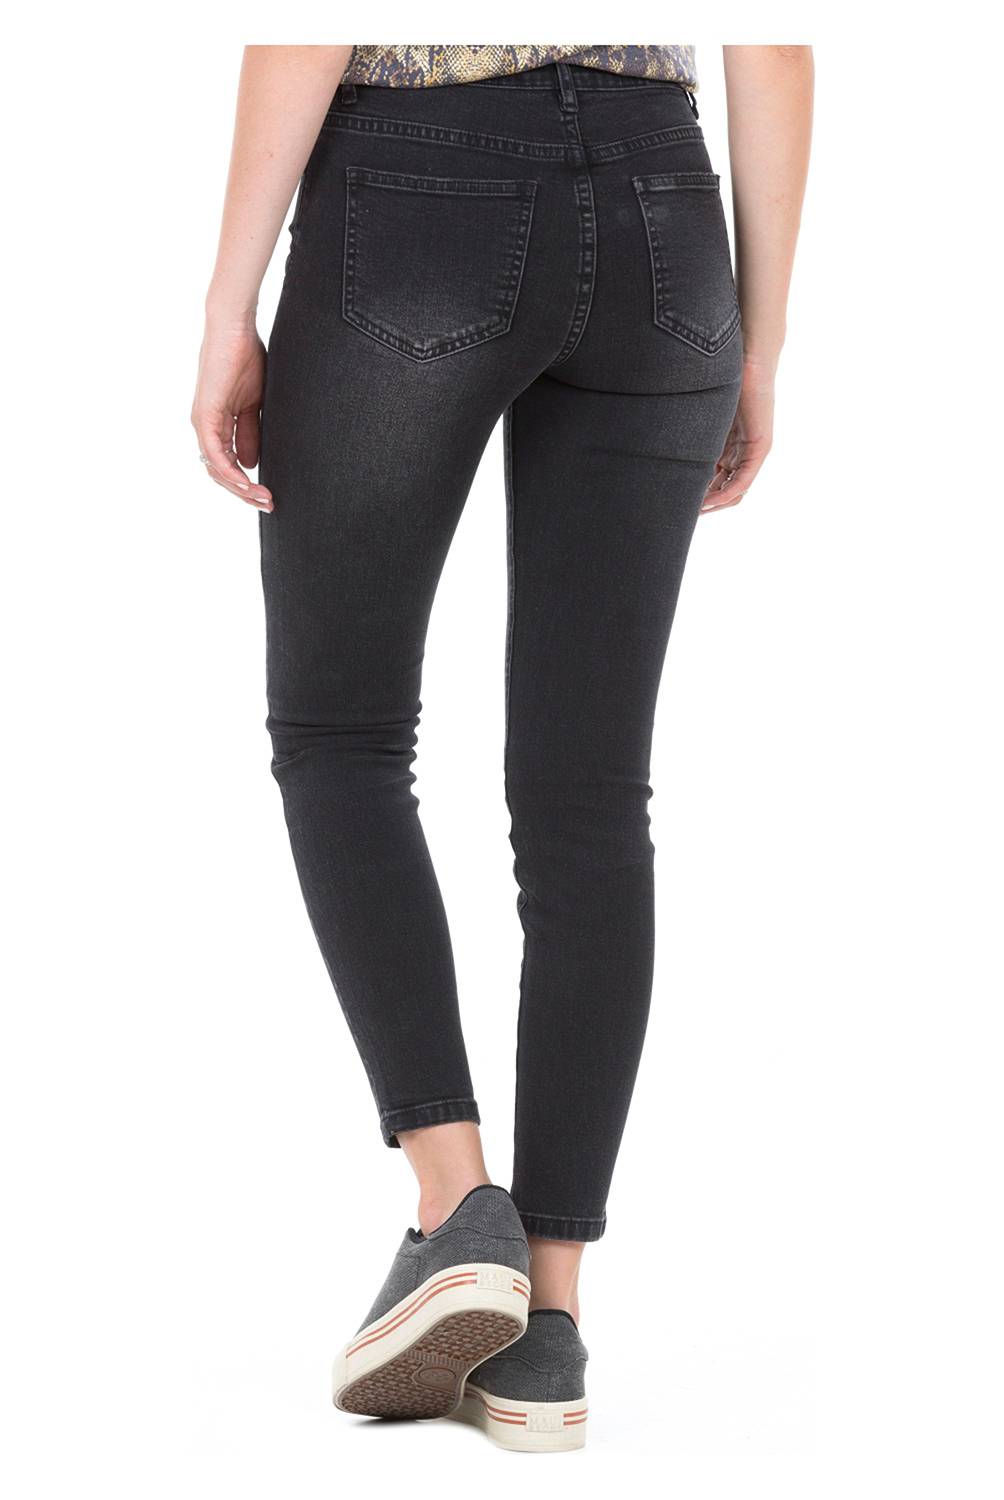 MALCREADO29559 - Jeans de Algodón Skinny Mujer